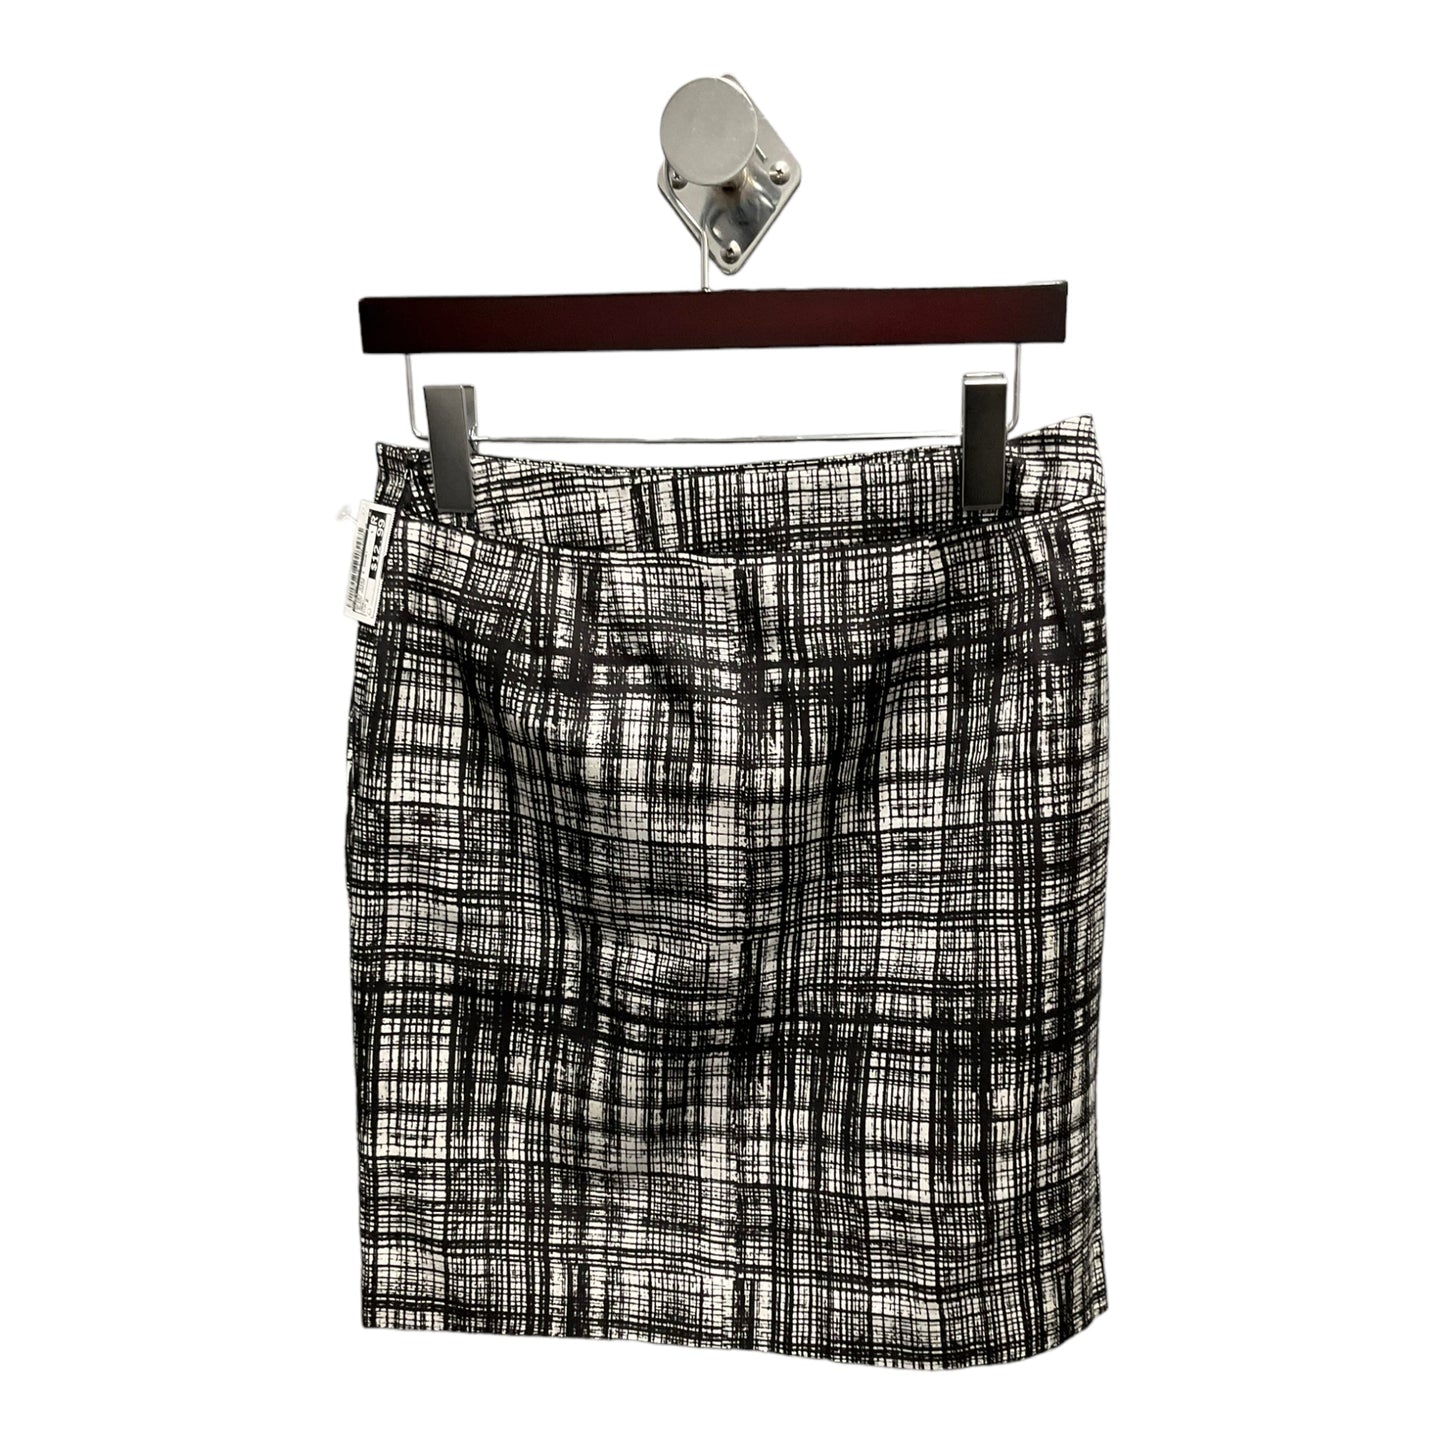 Skirt Mini & Short By Loft  Size: 2